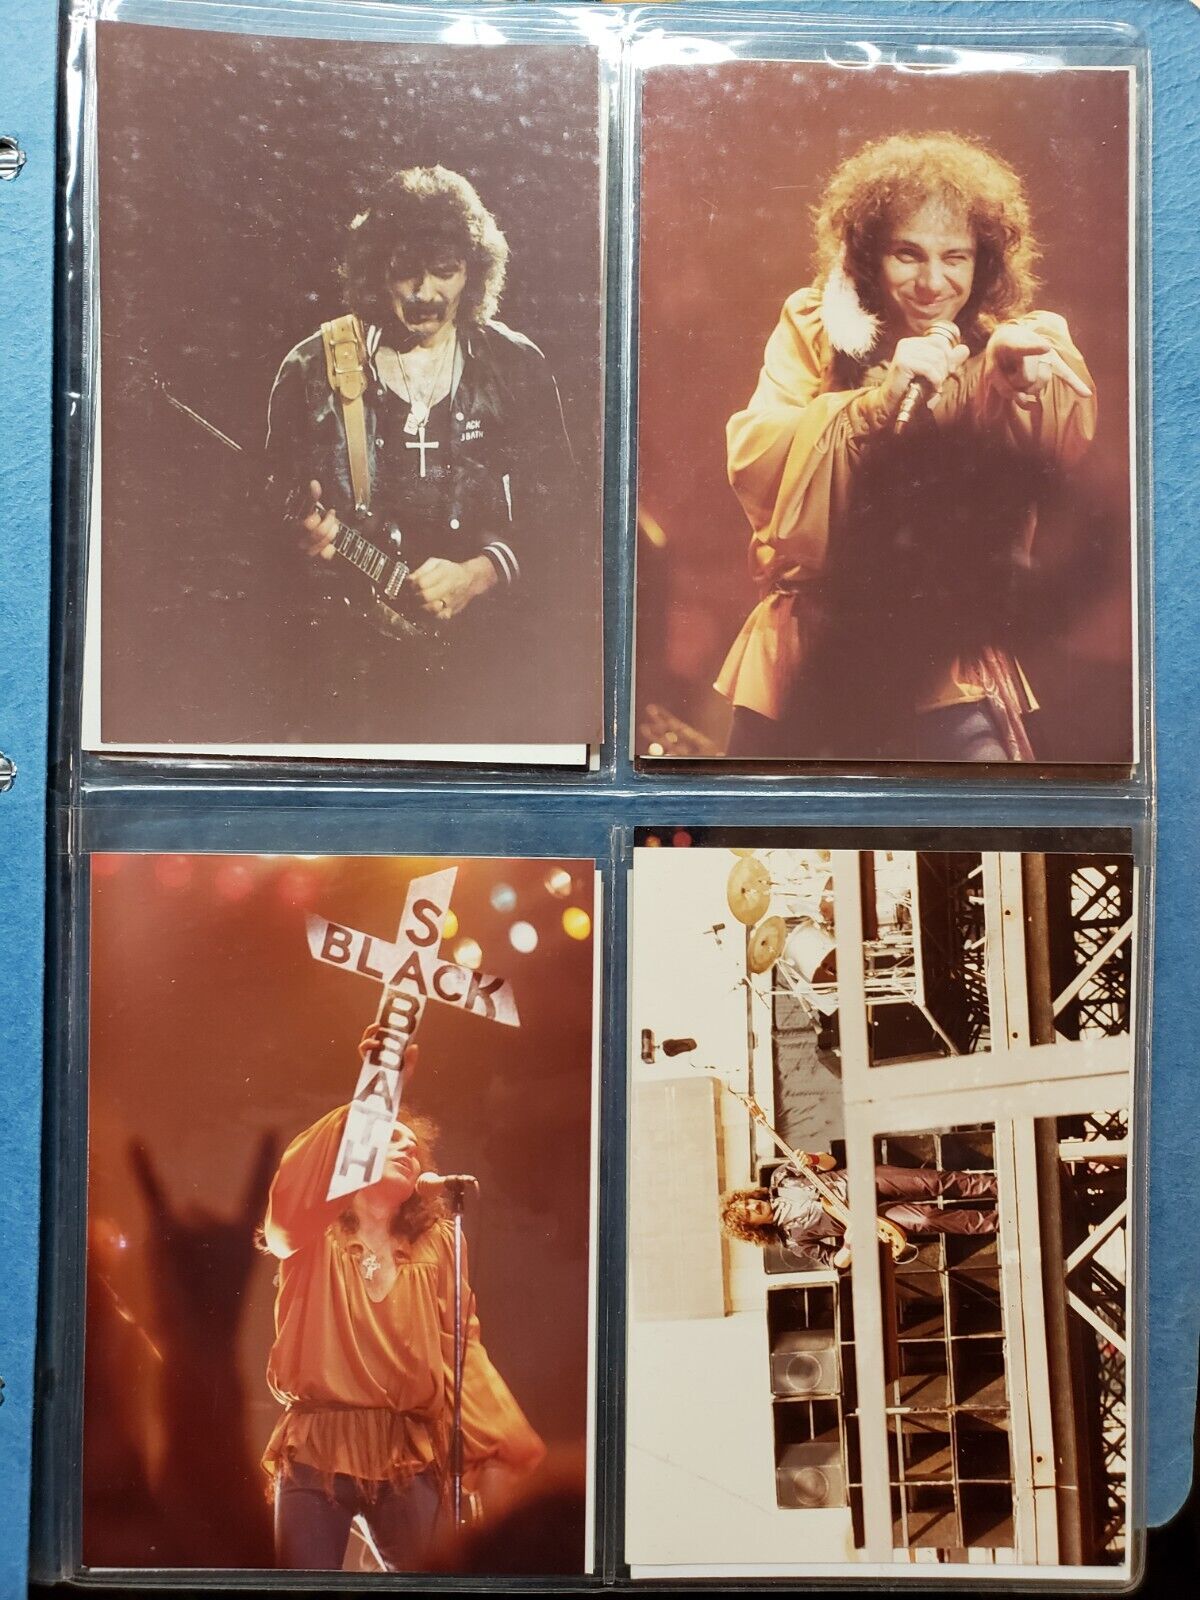 Lot of 21 Vintage Black Sabbath Concert Photographs, 1980s, Dio, Ozzy, Iommi